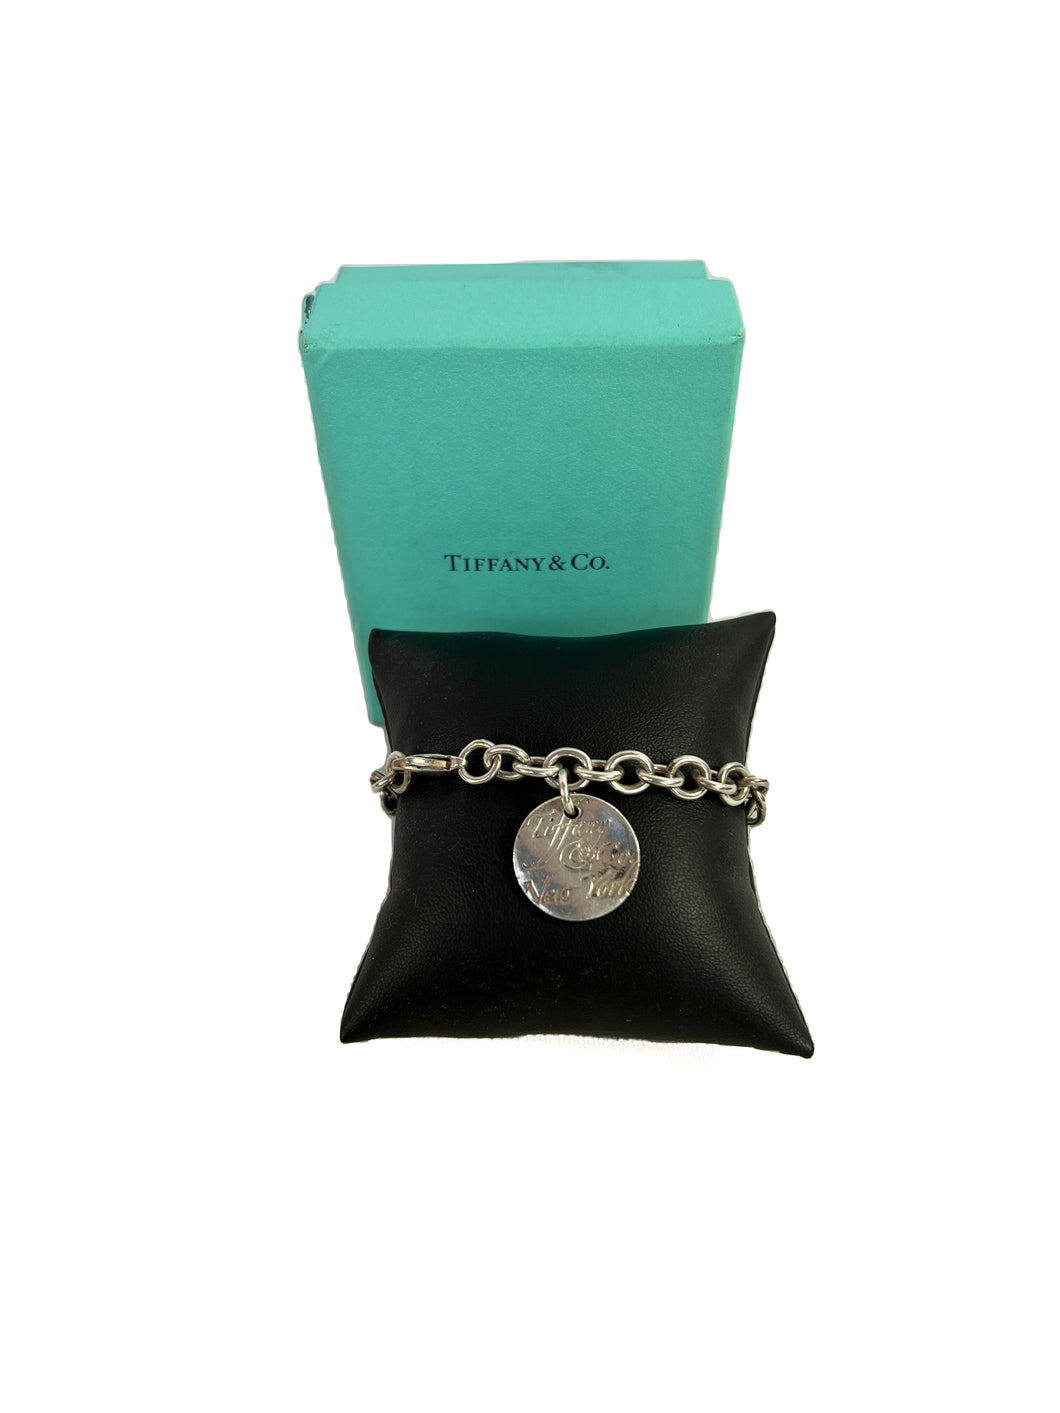 Tiffany & Co notes charm bracelet